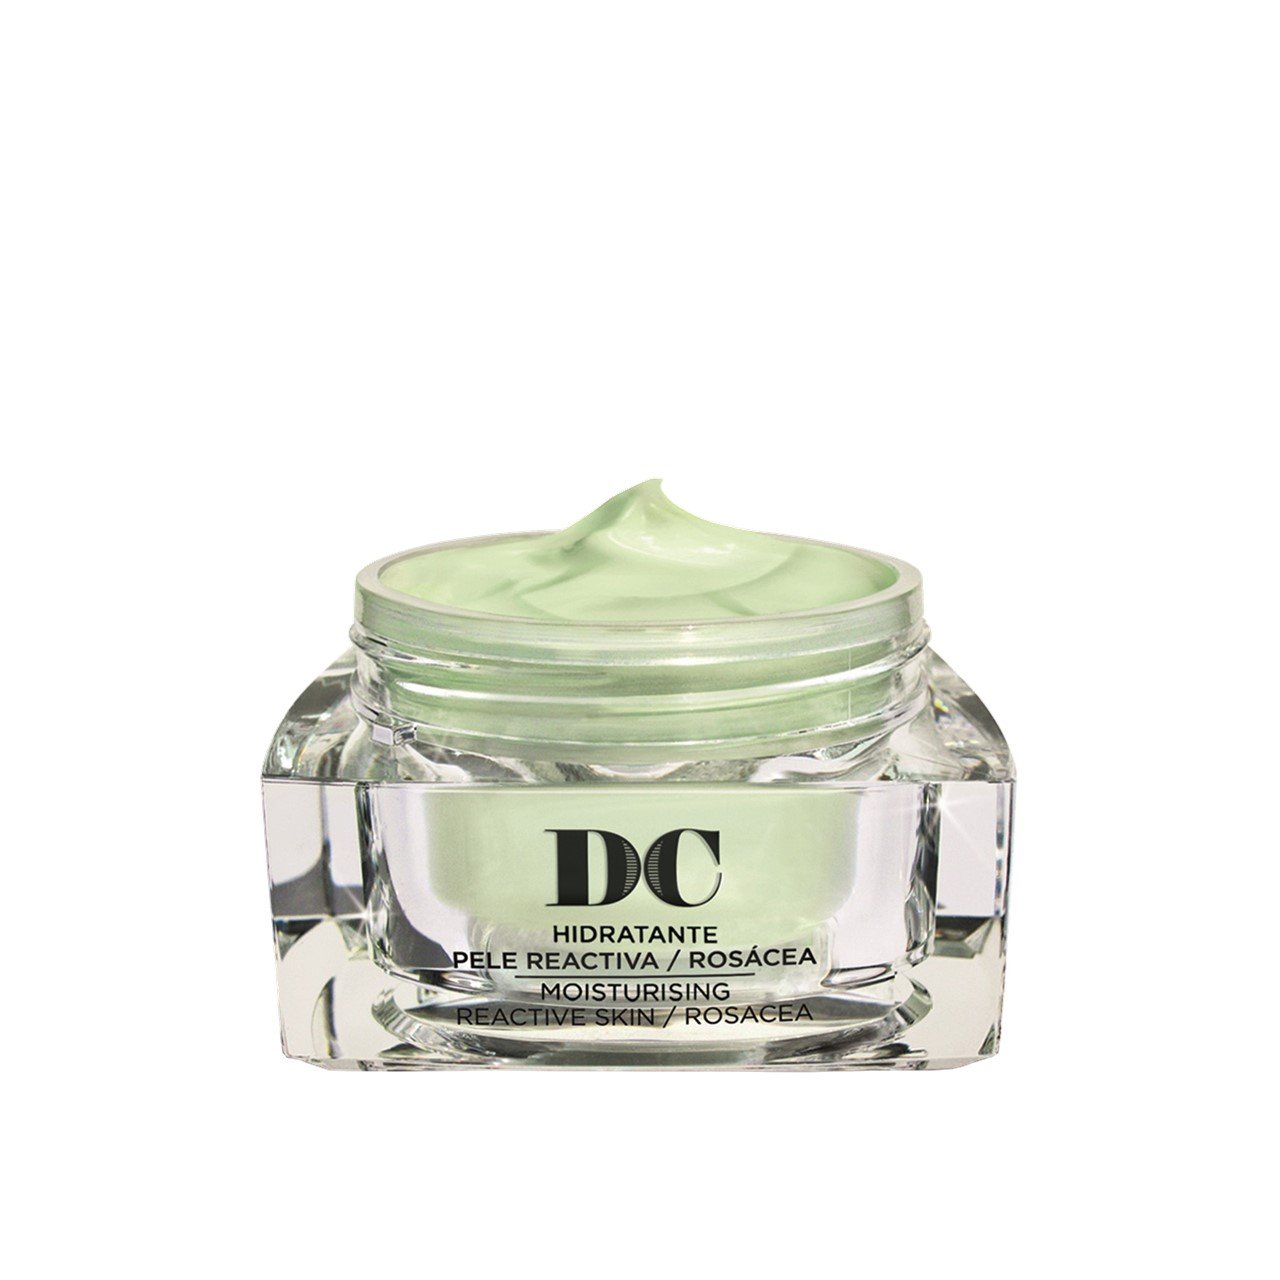 DC Moisturizing Cream for Reactive Skin/Rosacea 50ml (1.69fl oz)